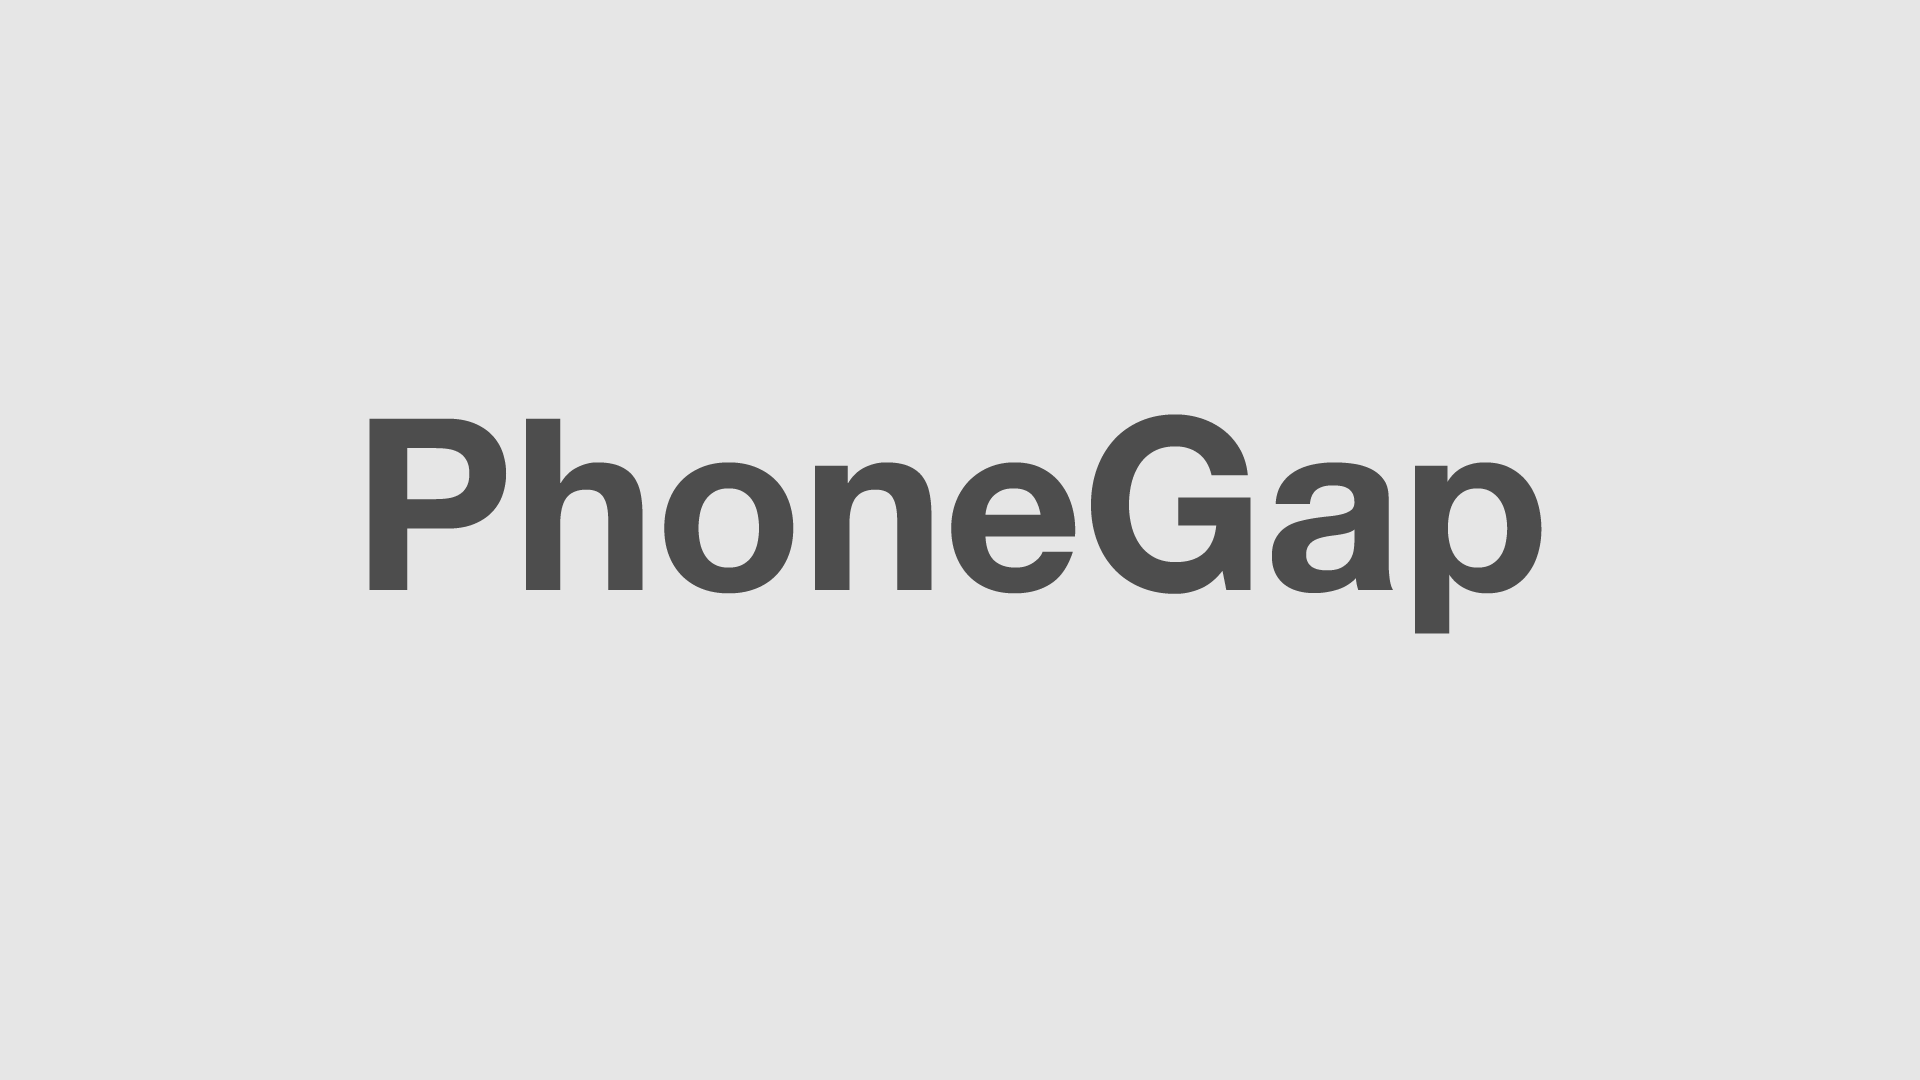 PhoneGap insignia